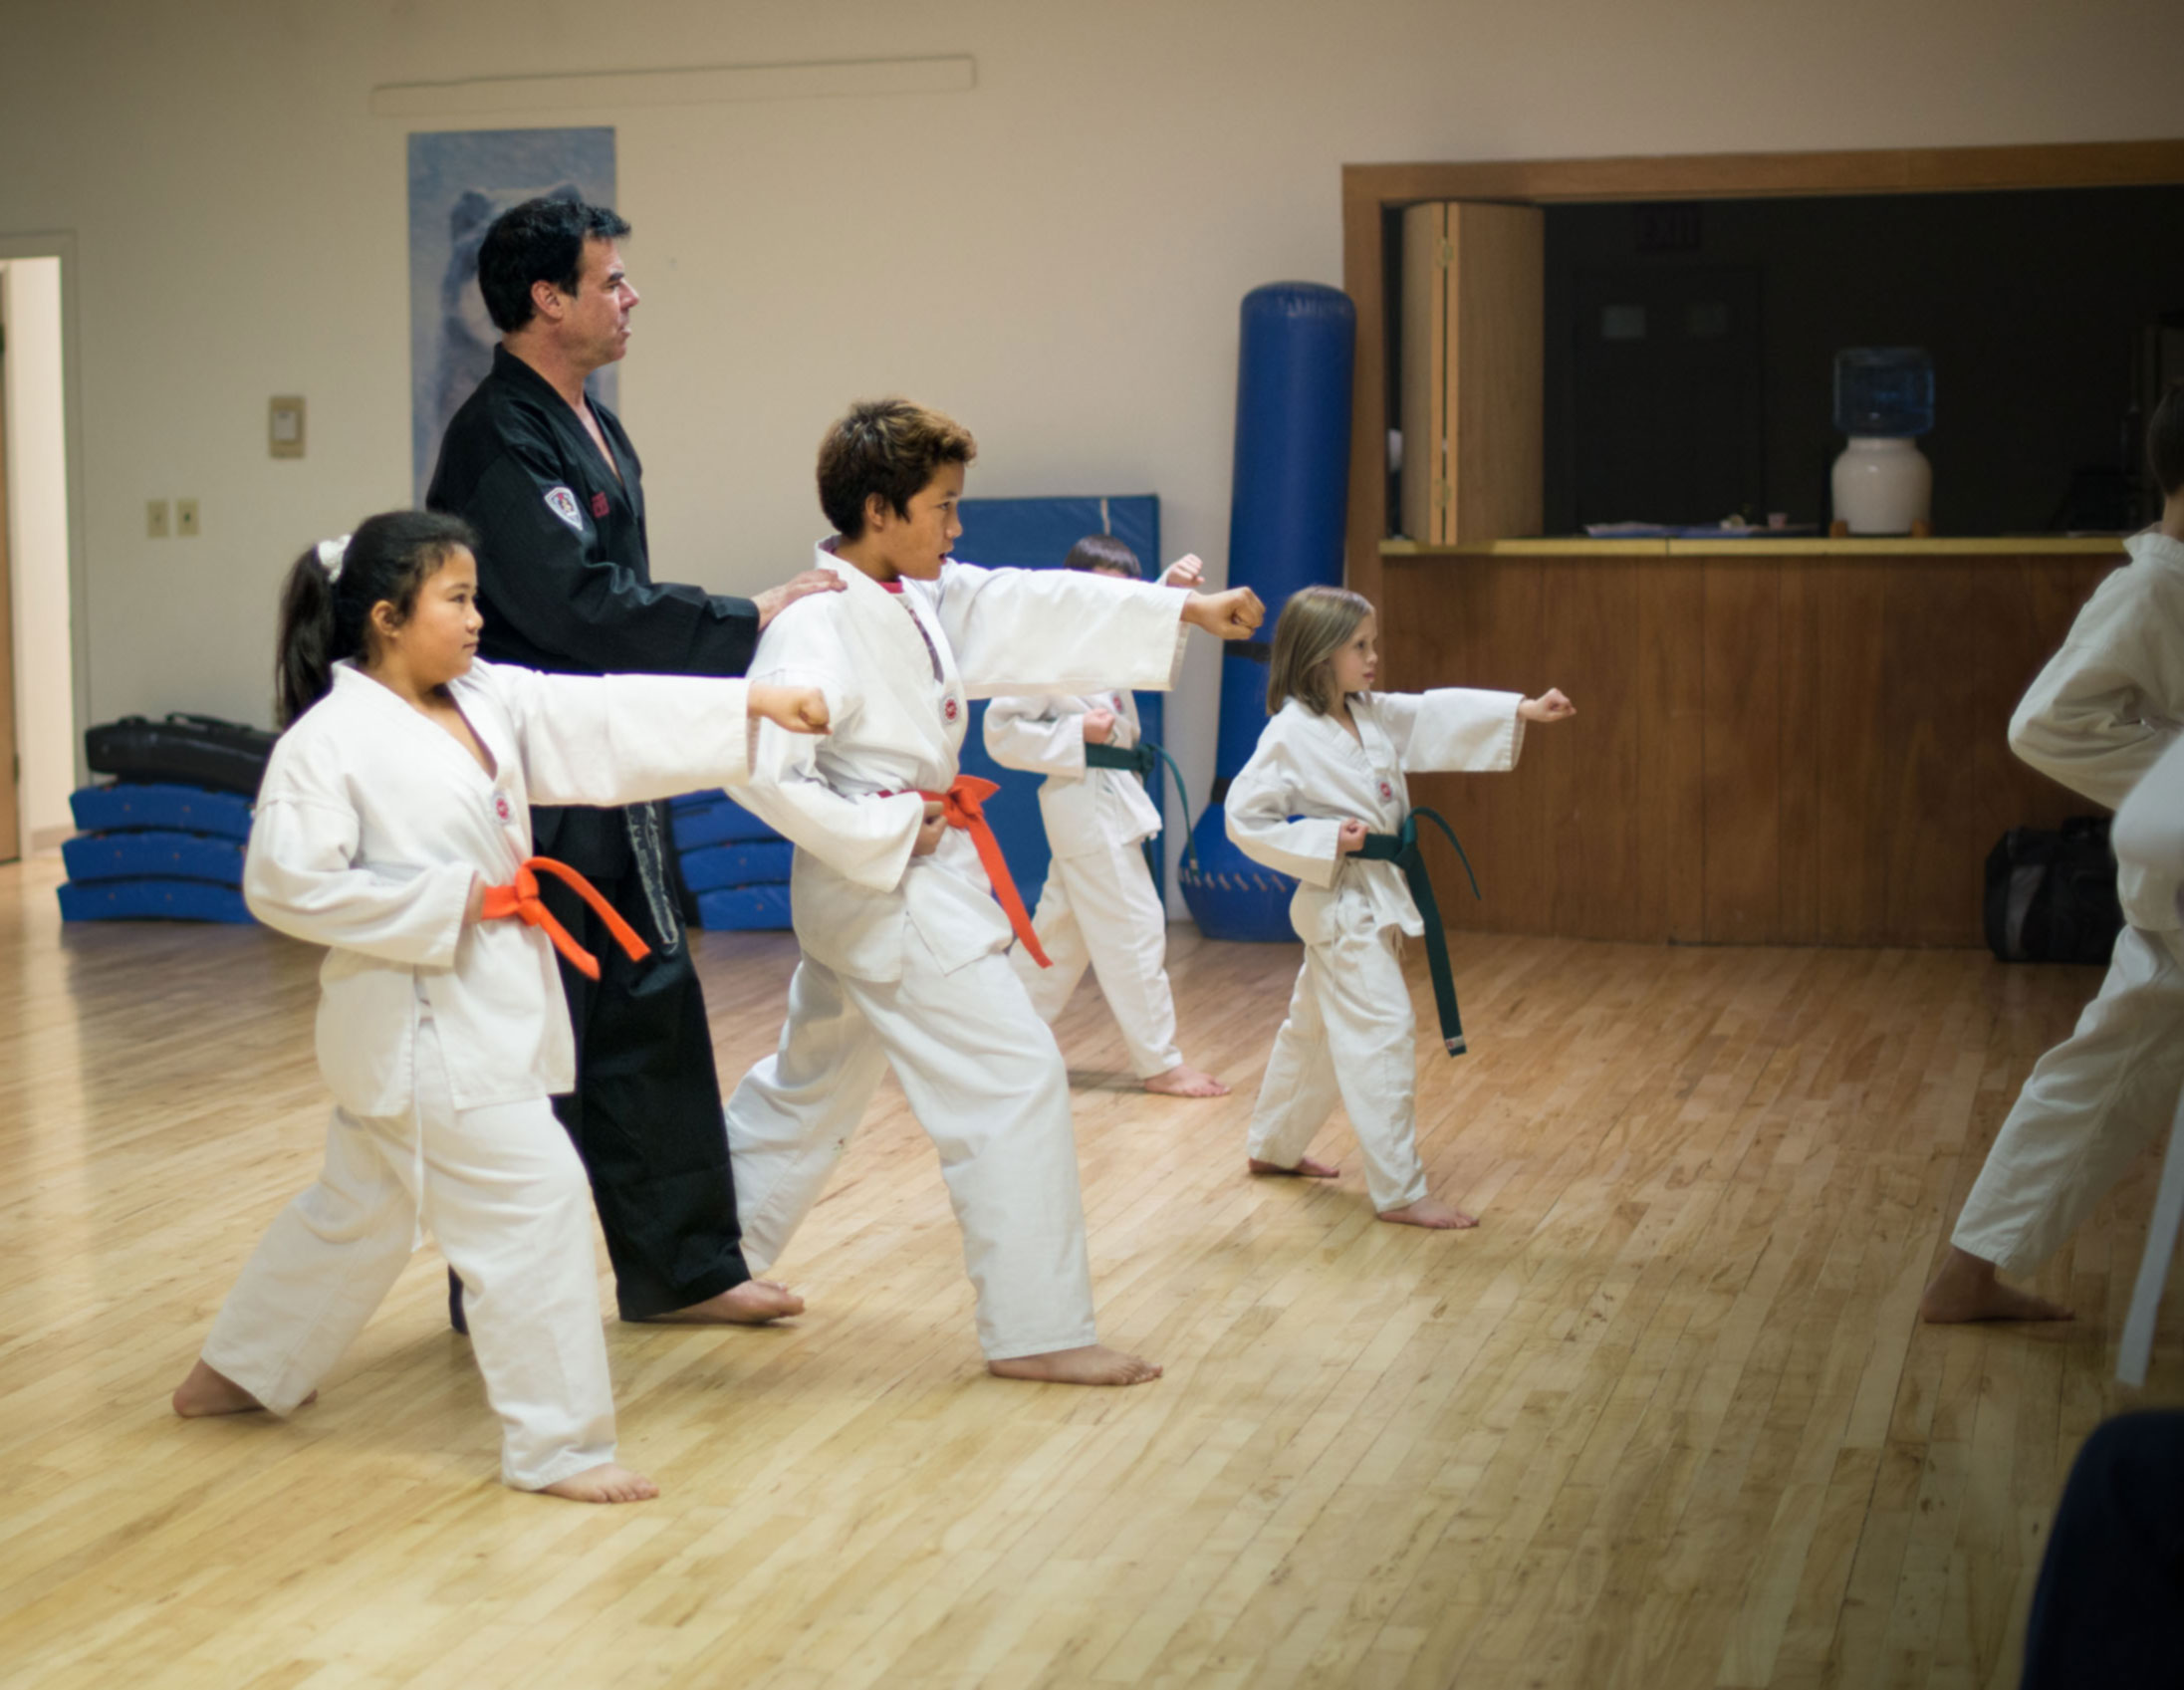 Kids Taekwondo class performing Taeguk forms